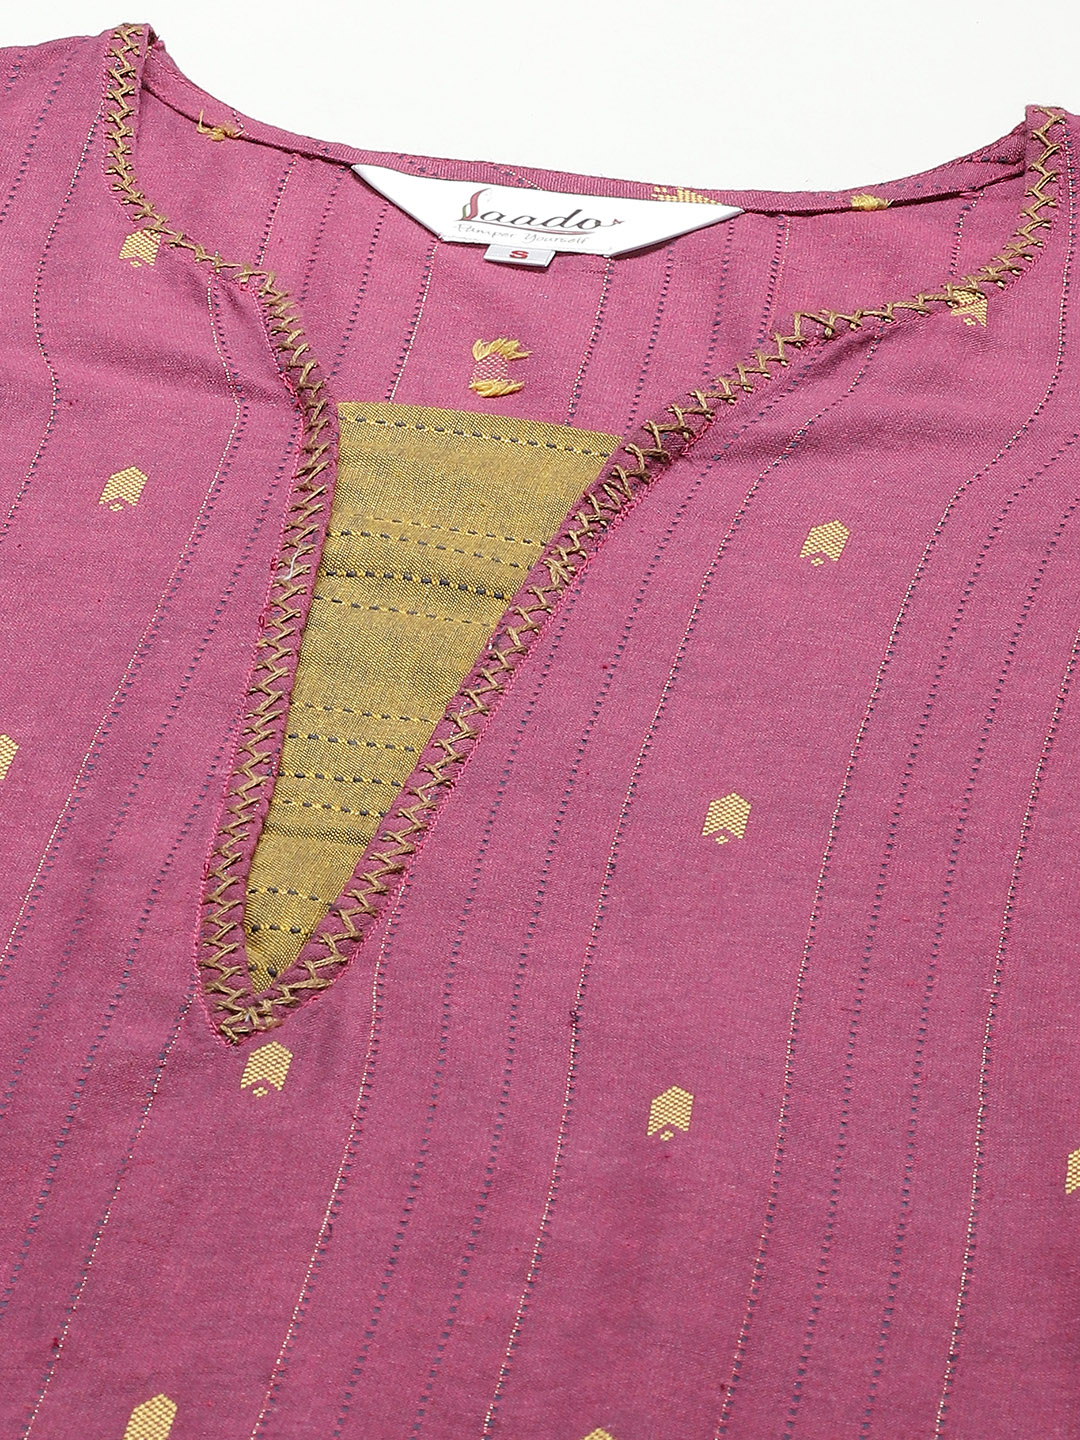 Pink & Golden Weaved Handloom  Cotton Kurta with Thread Work